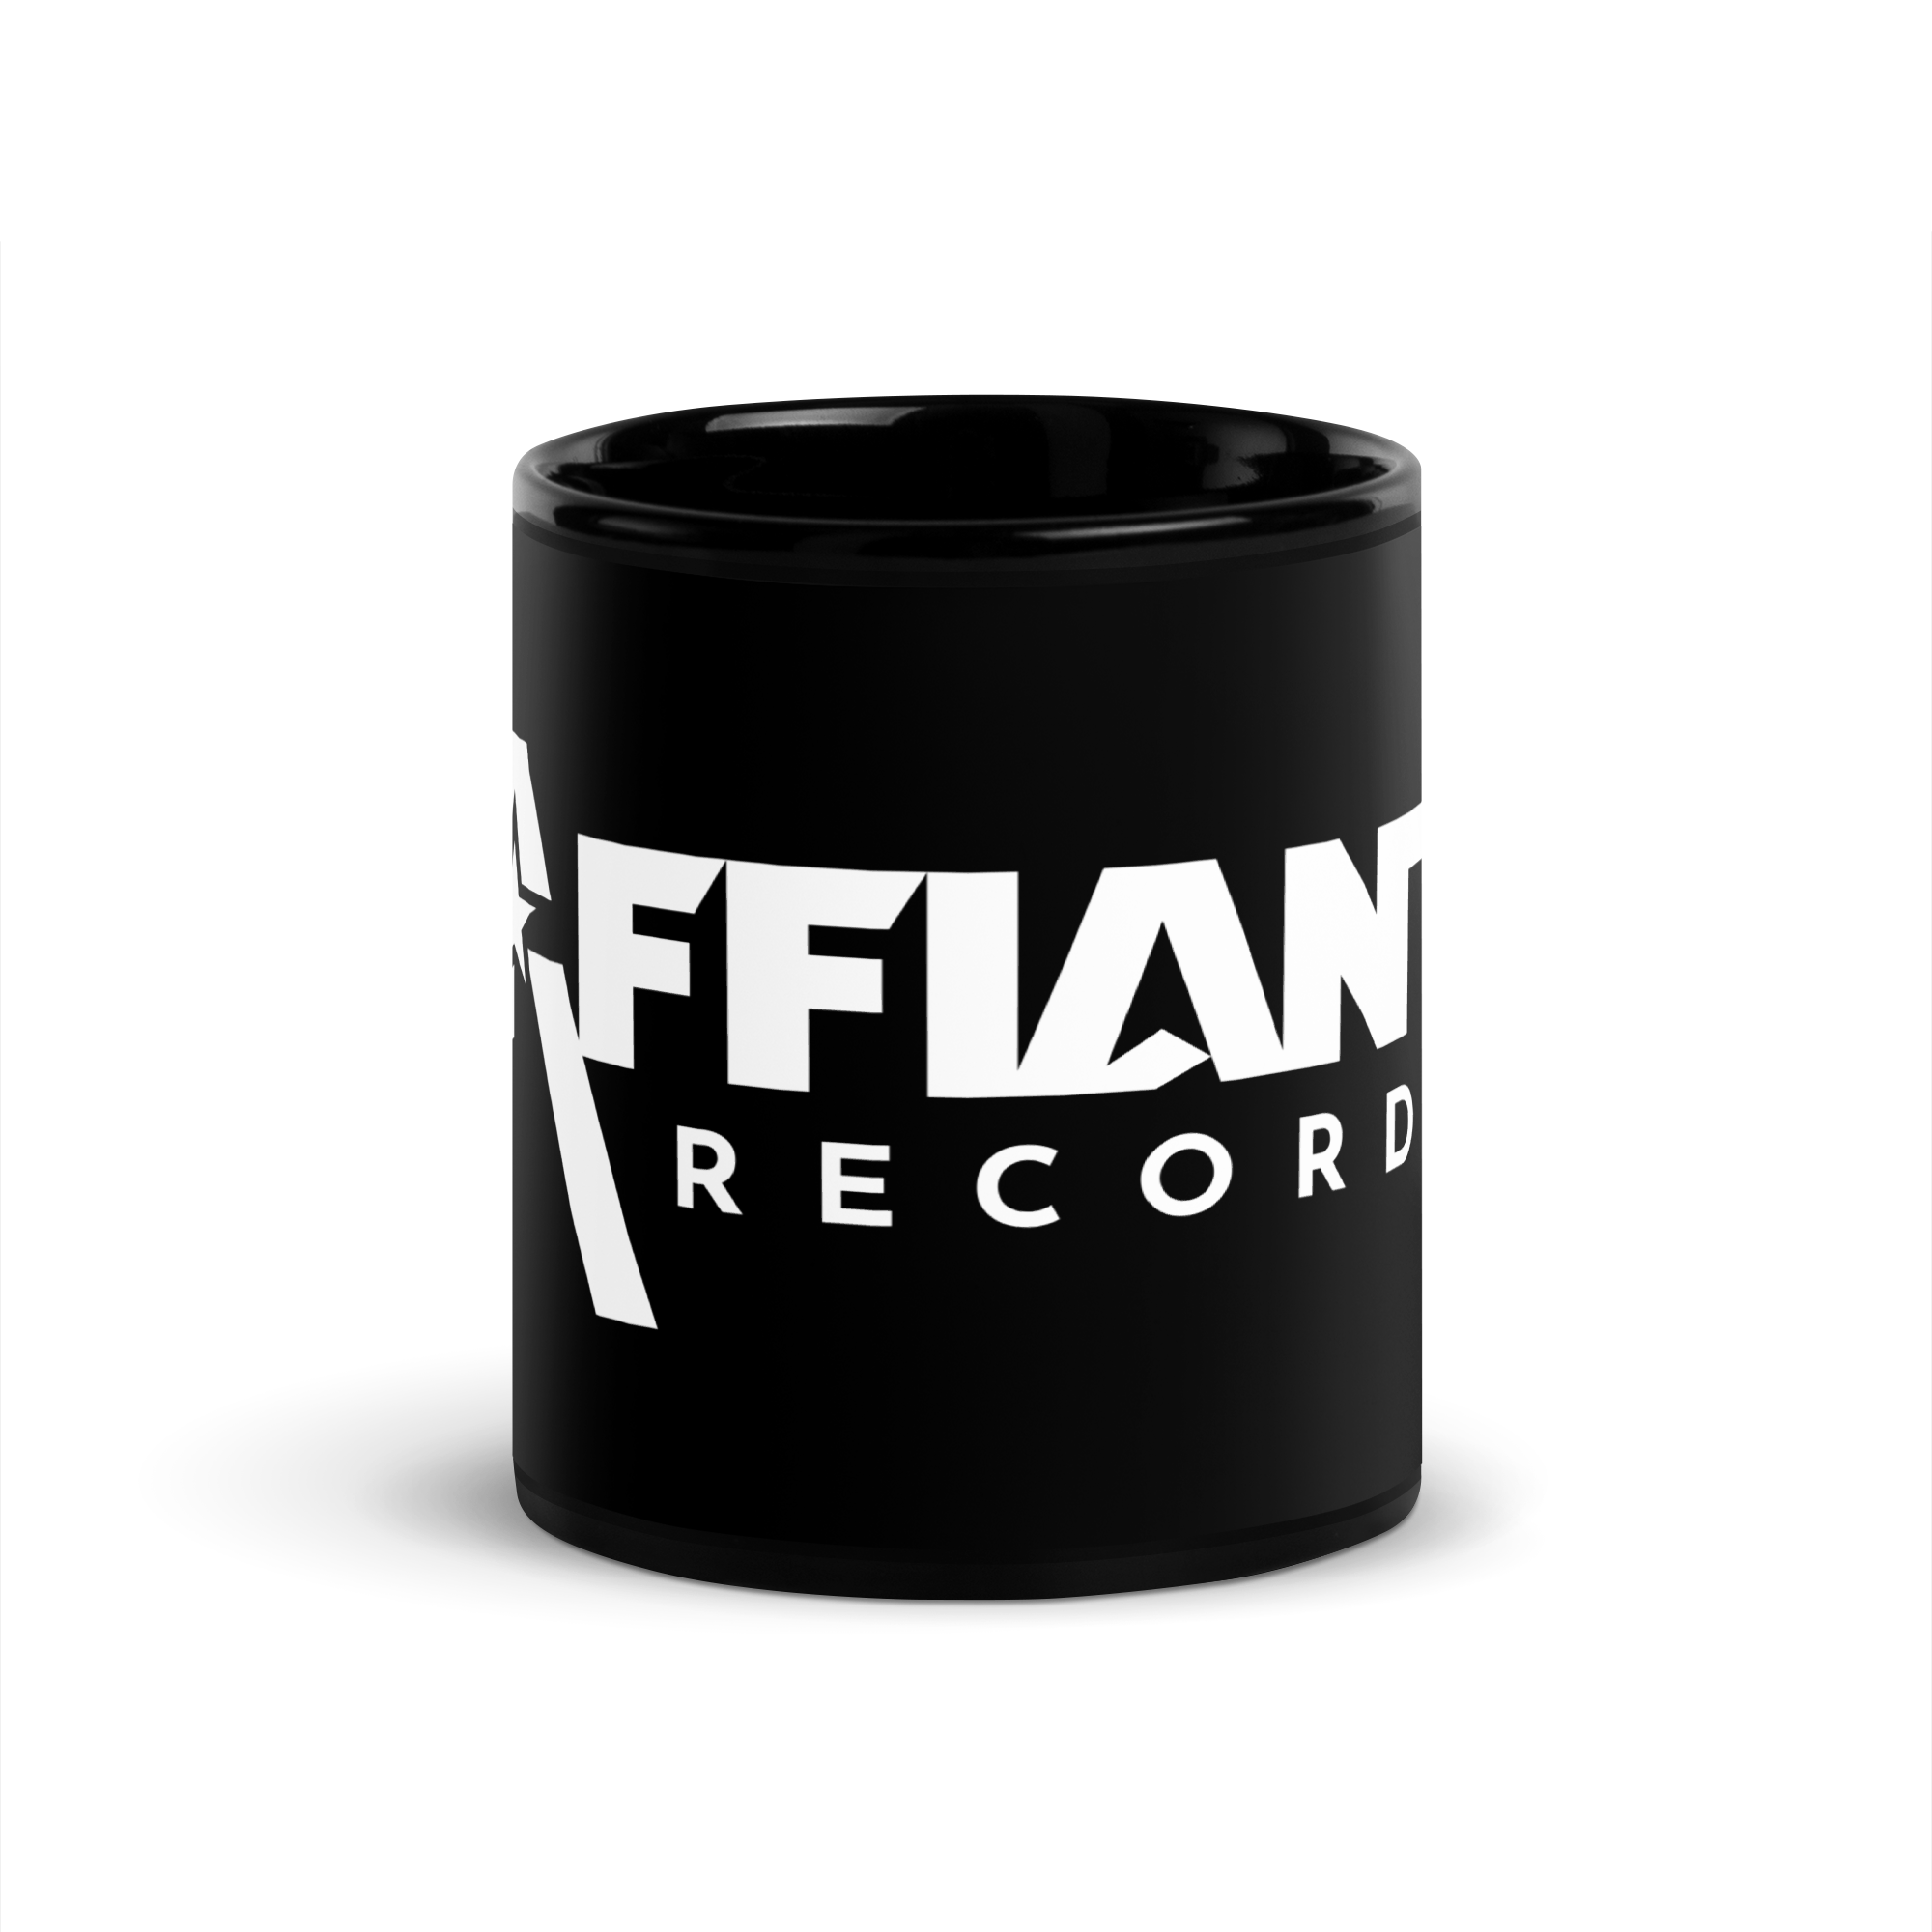 AFFIANT RECORDS - LOGO BLACK GLOSSY MUG